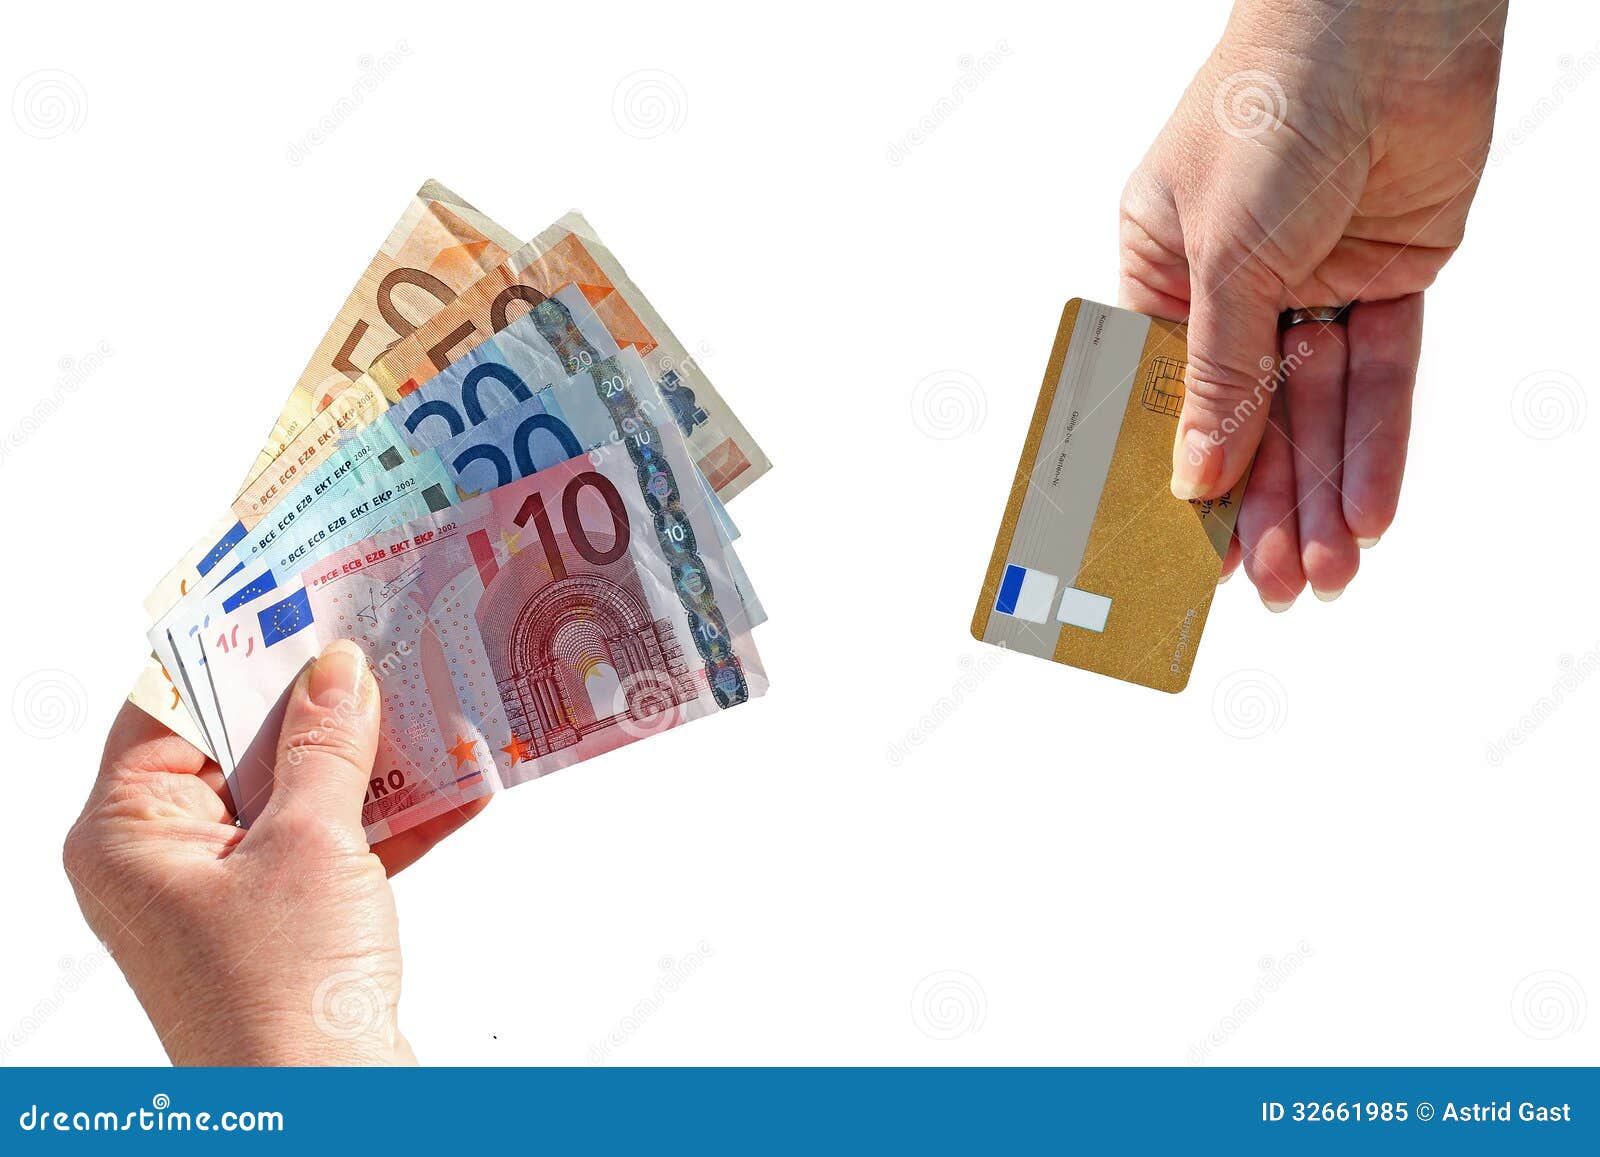 Cash or credit card stock image. Image of euroseems, financial - 32661985